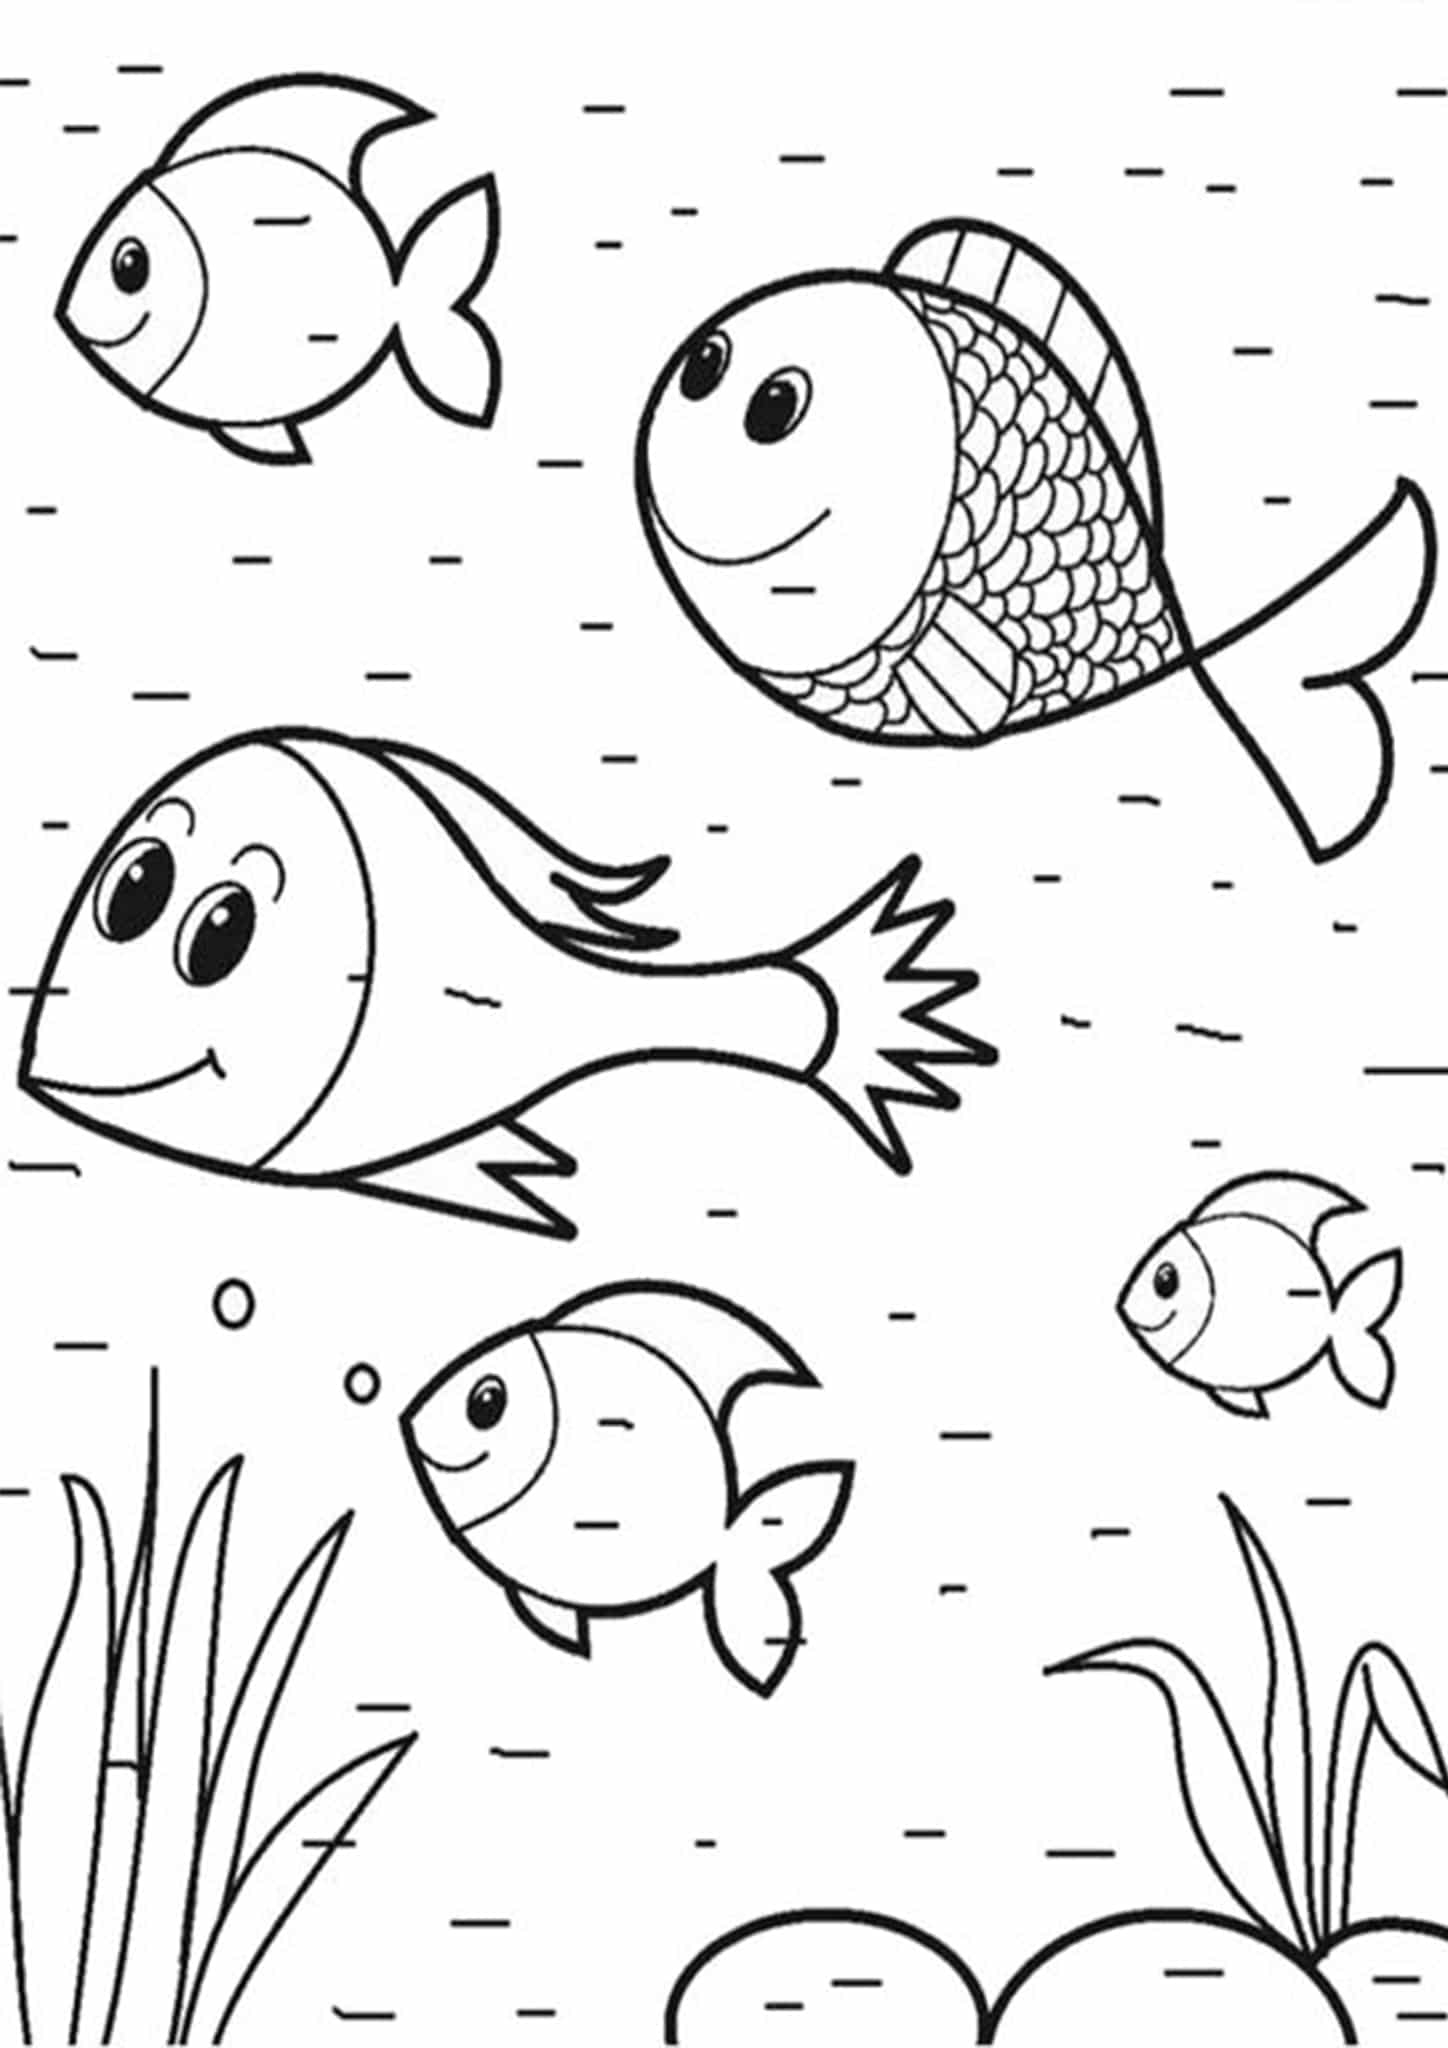 Cinco peces de Dibujos Animados